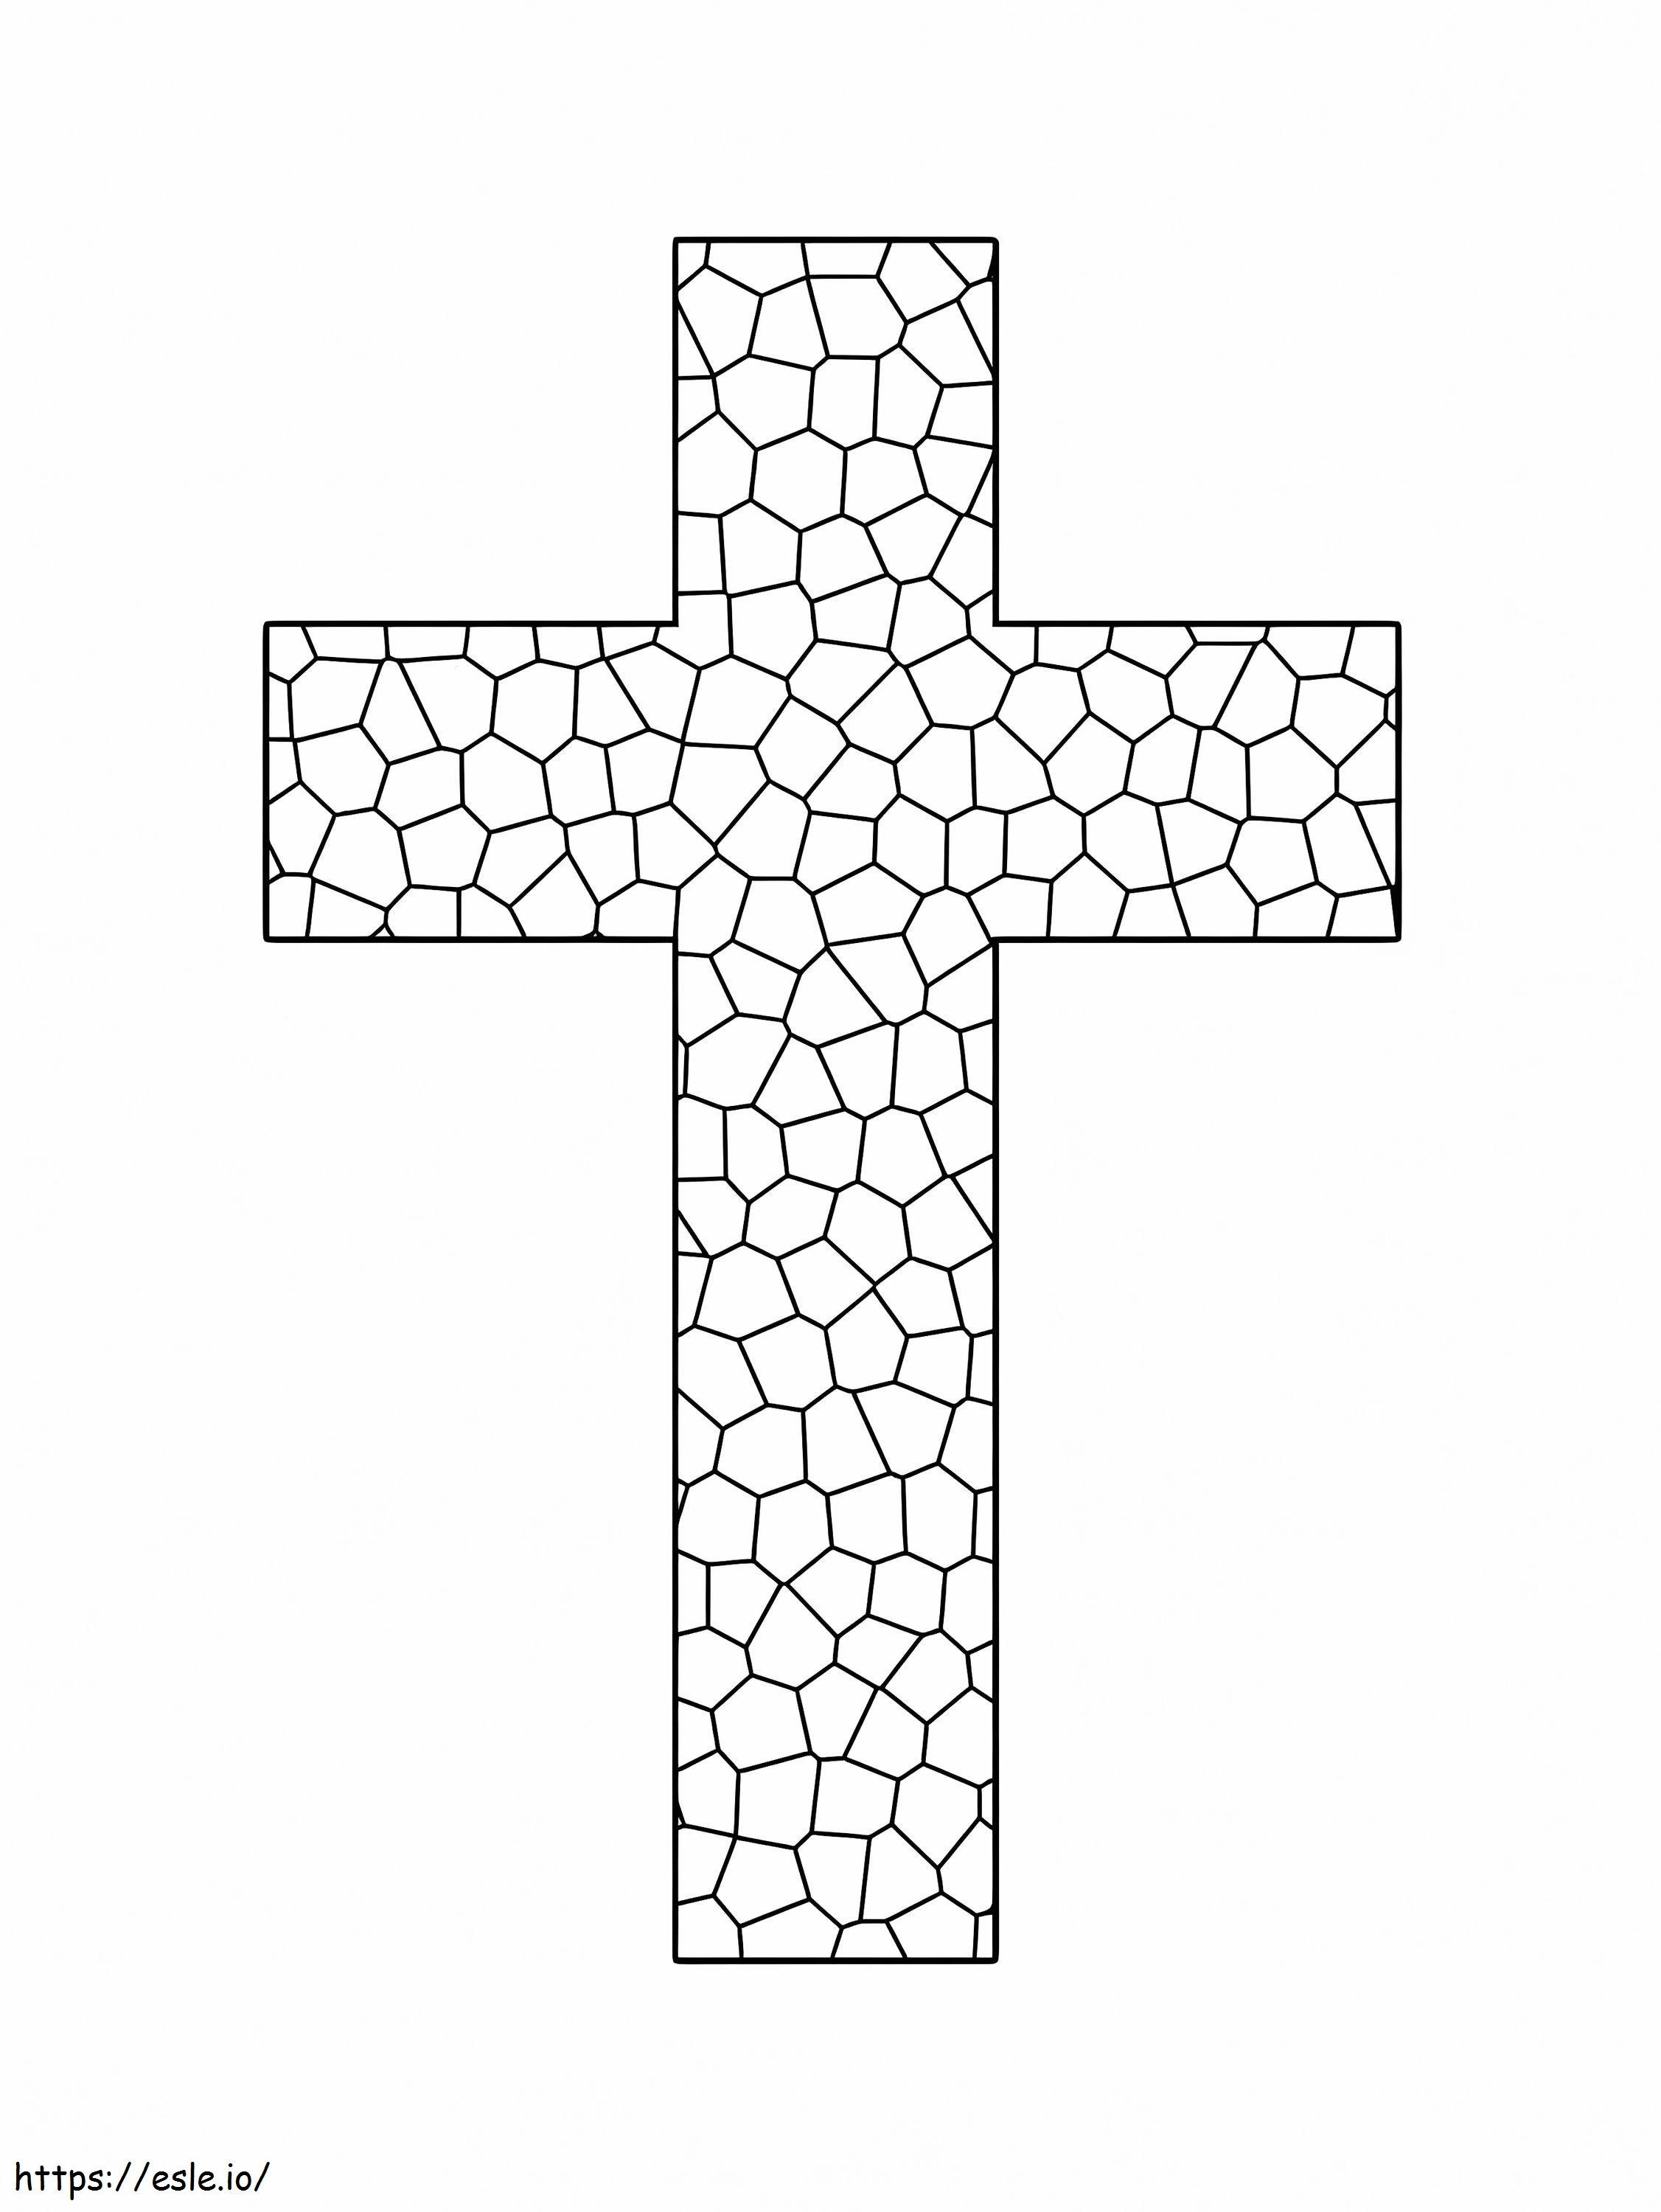 Kreuzförmiges Mosaik 1 ausmalbilder